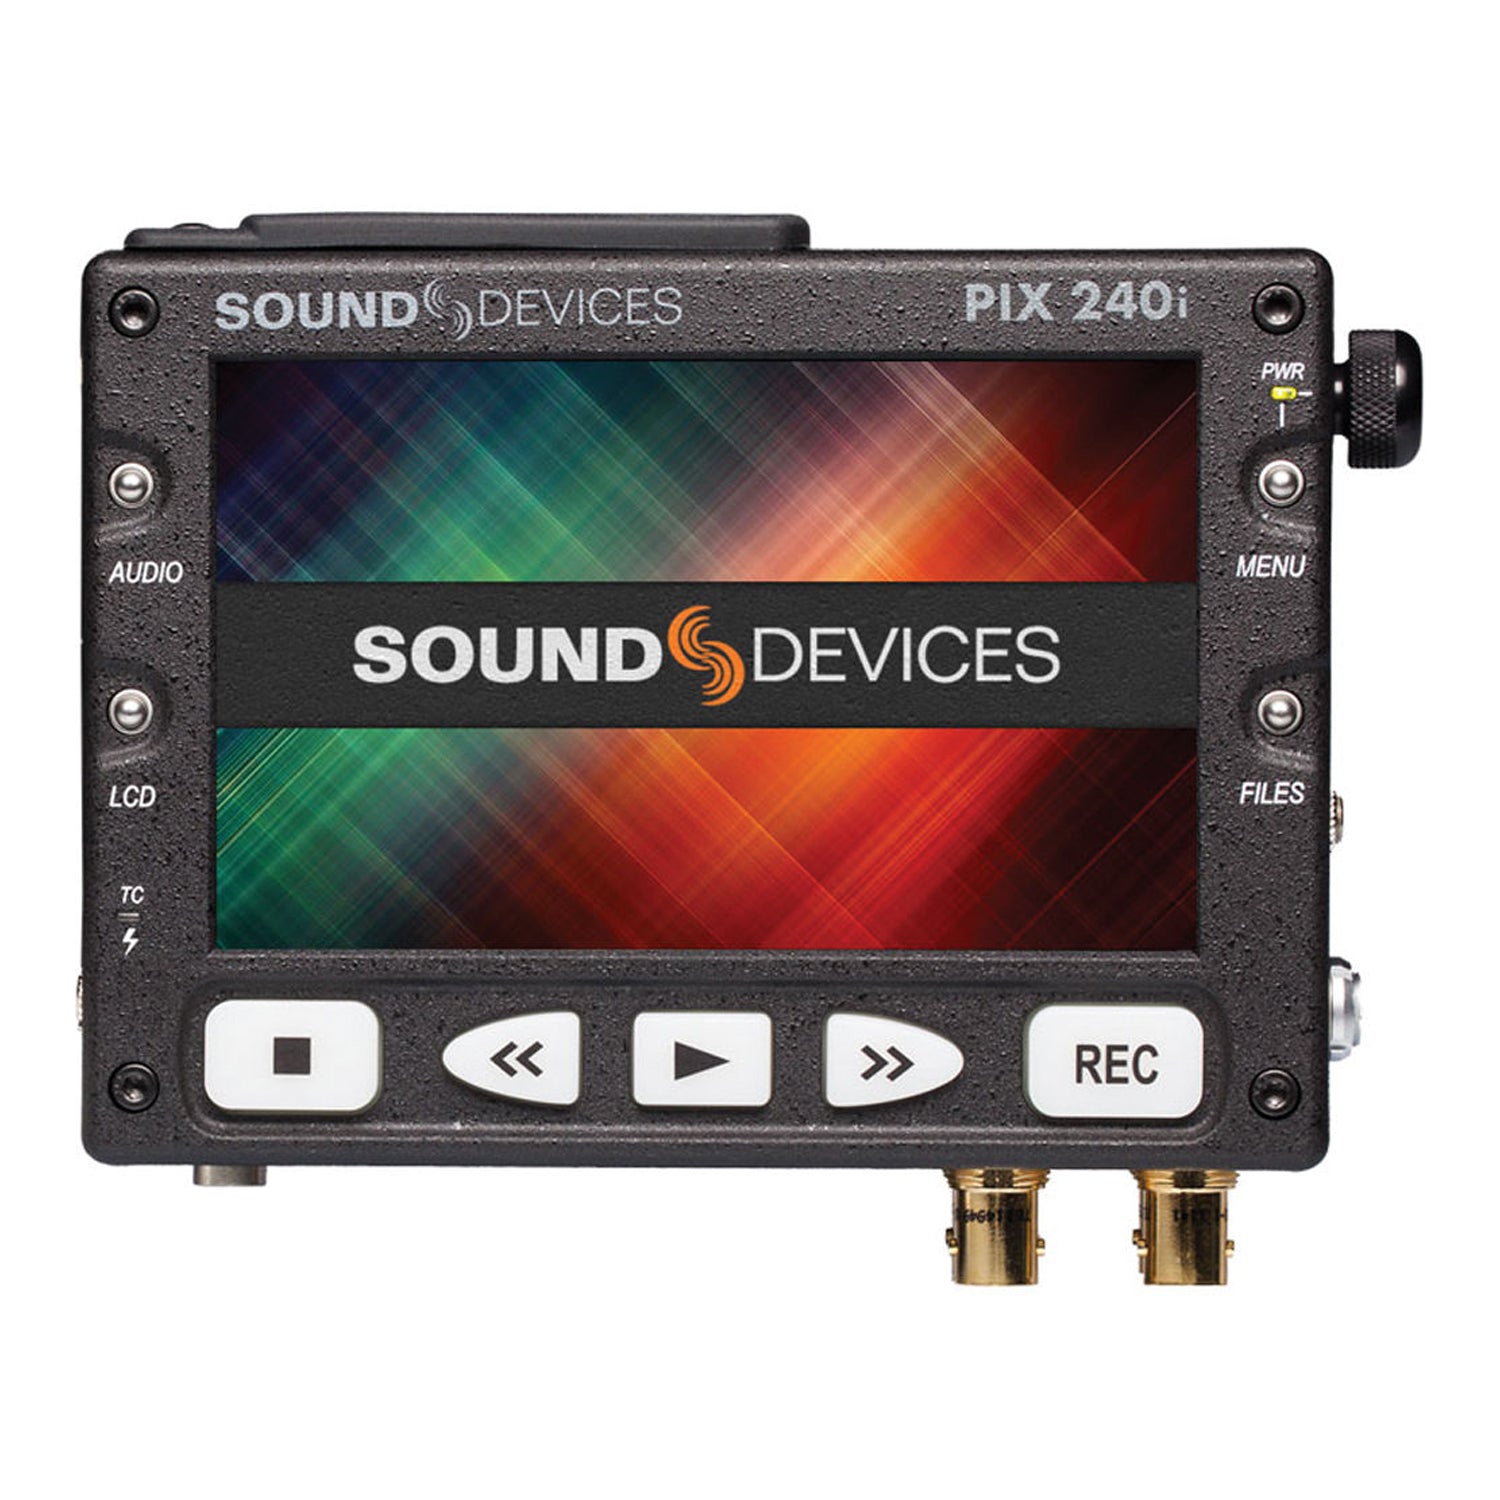 Sound Devices PIX 240i 5" Portable Video Recorder & Monitor